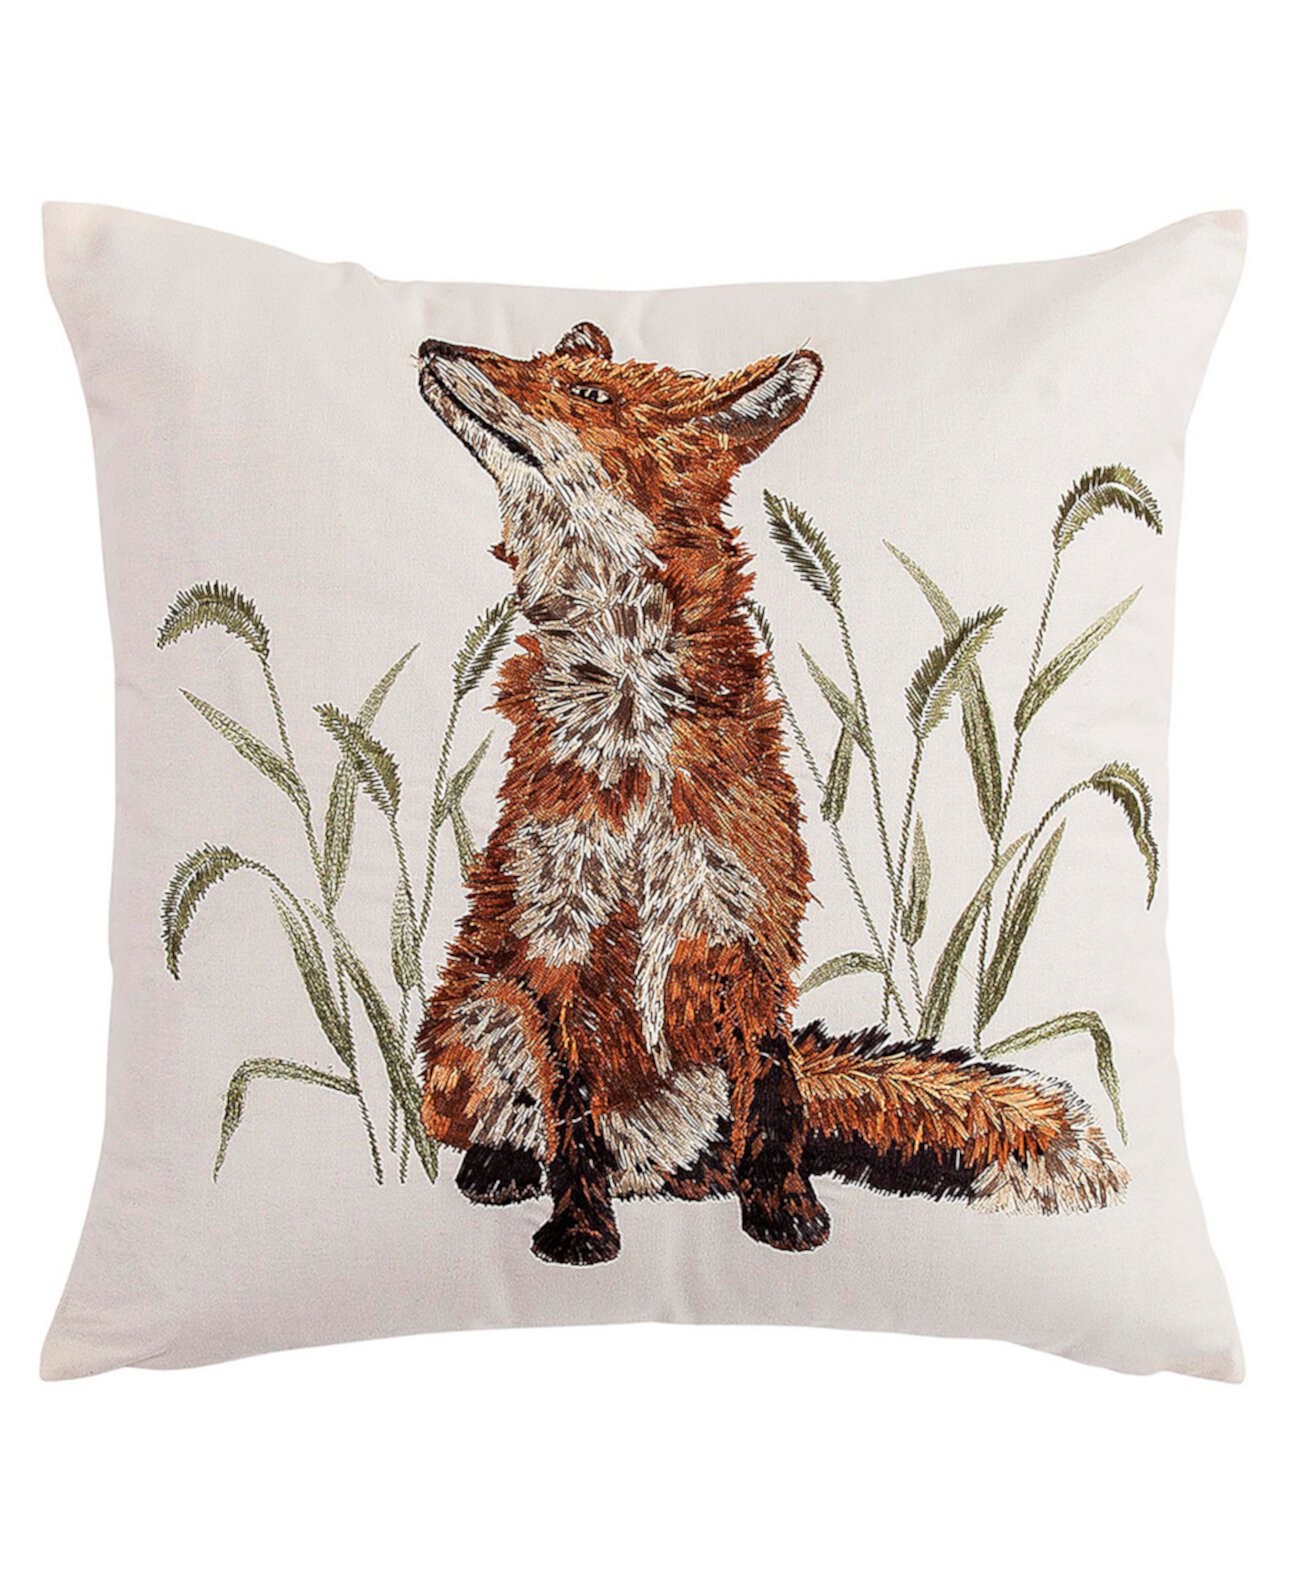 Декоративная подушка Fox, 18 x 18 дюймов American Heritage Textiles